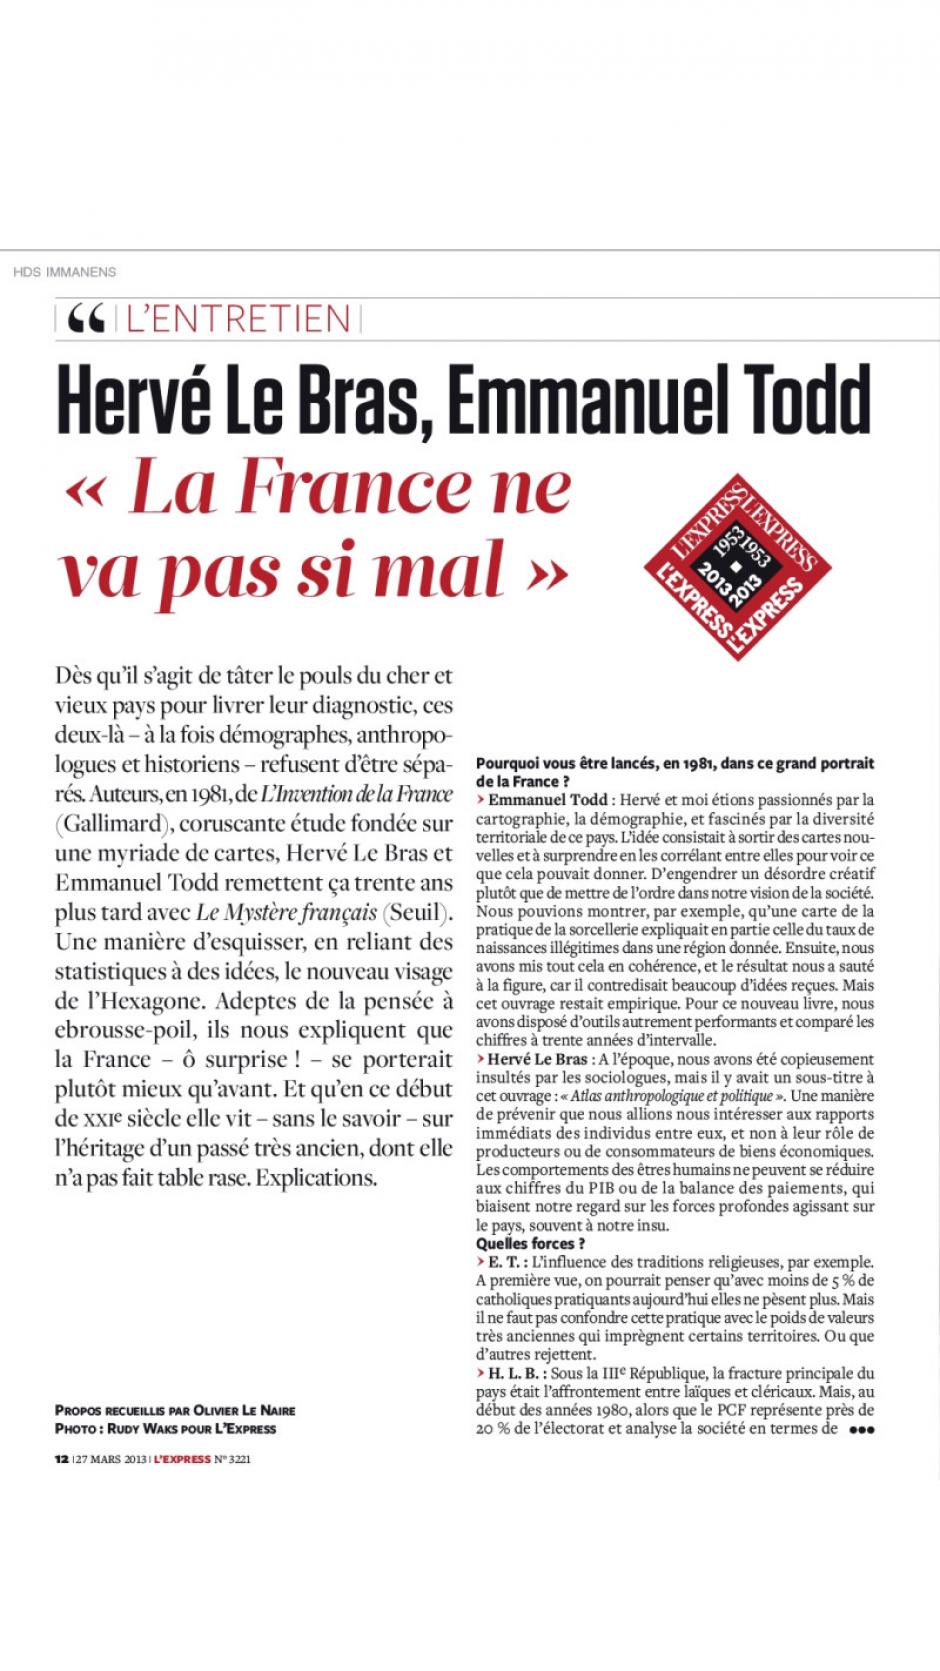 20130327-L'express-Hervé Le Bras-Emmanuel Todd : la France ne va pas si mal